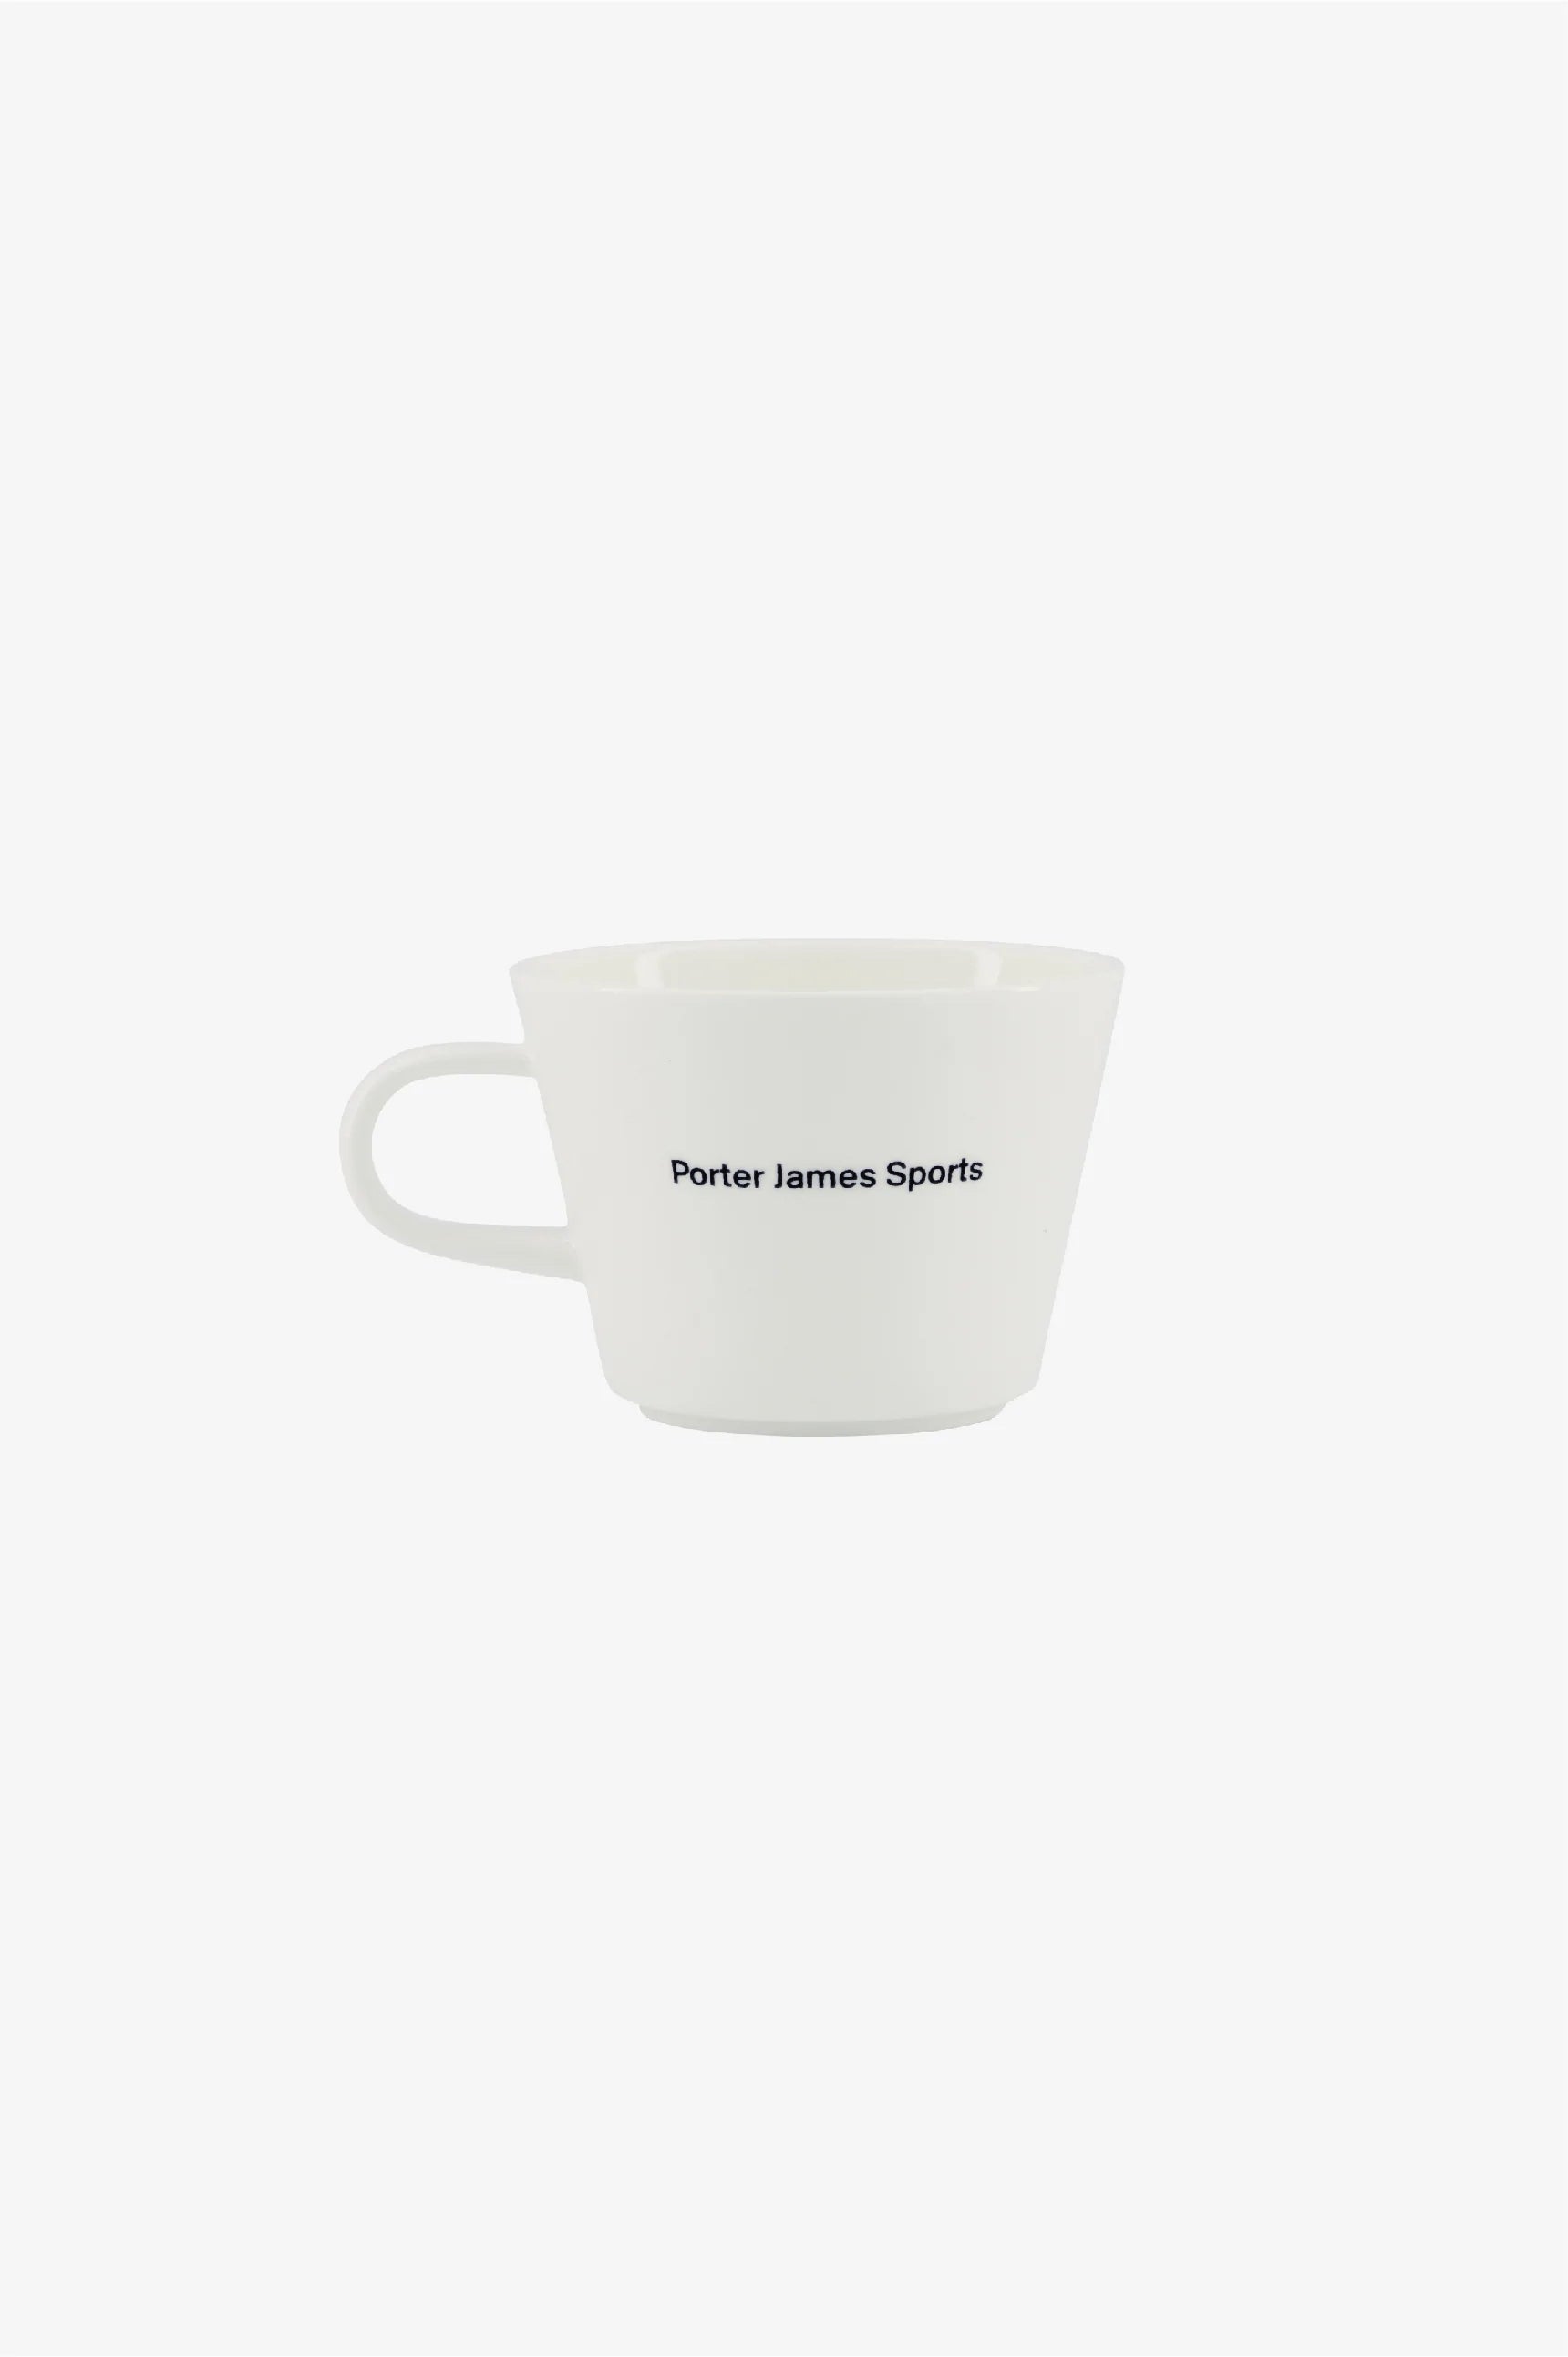 ACME x PJS Coffee Cups